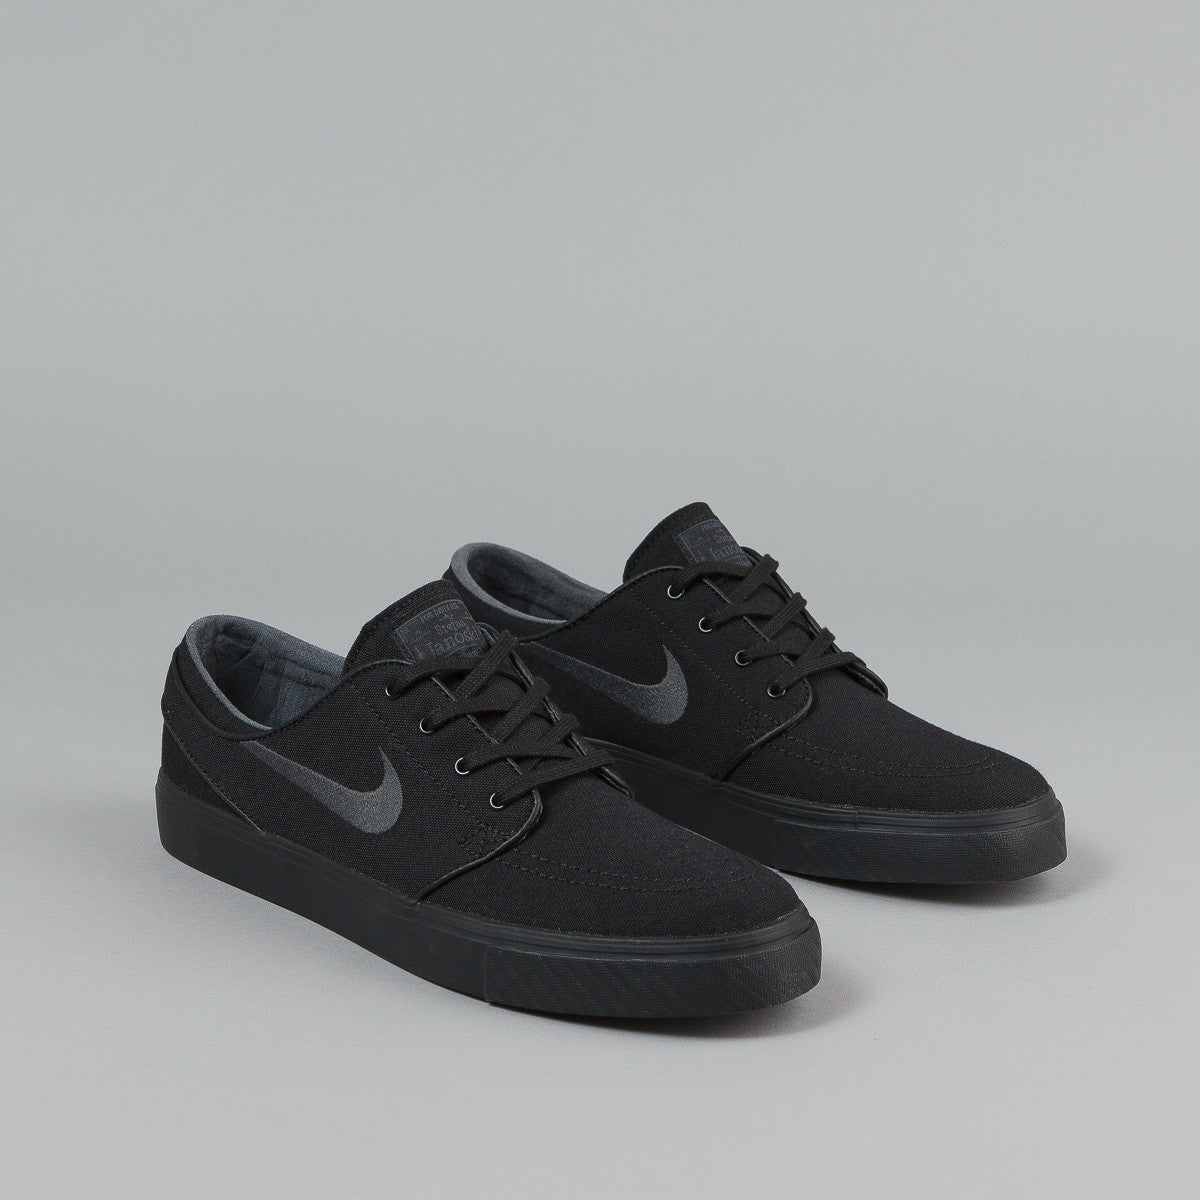 Nike SB Stefan Janoski CNVS Shoes - Black / Anthracite | Flatspot